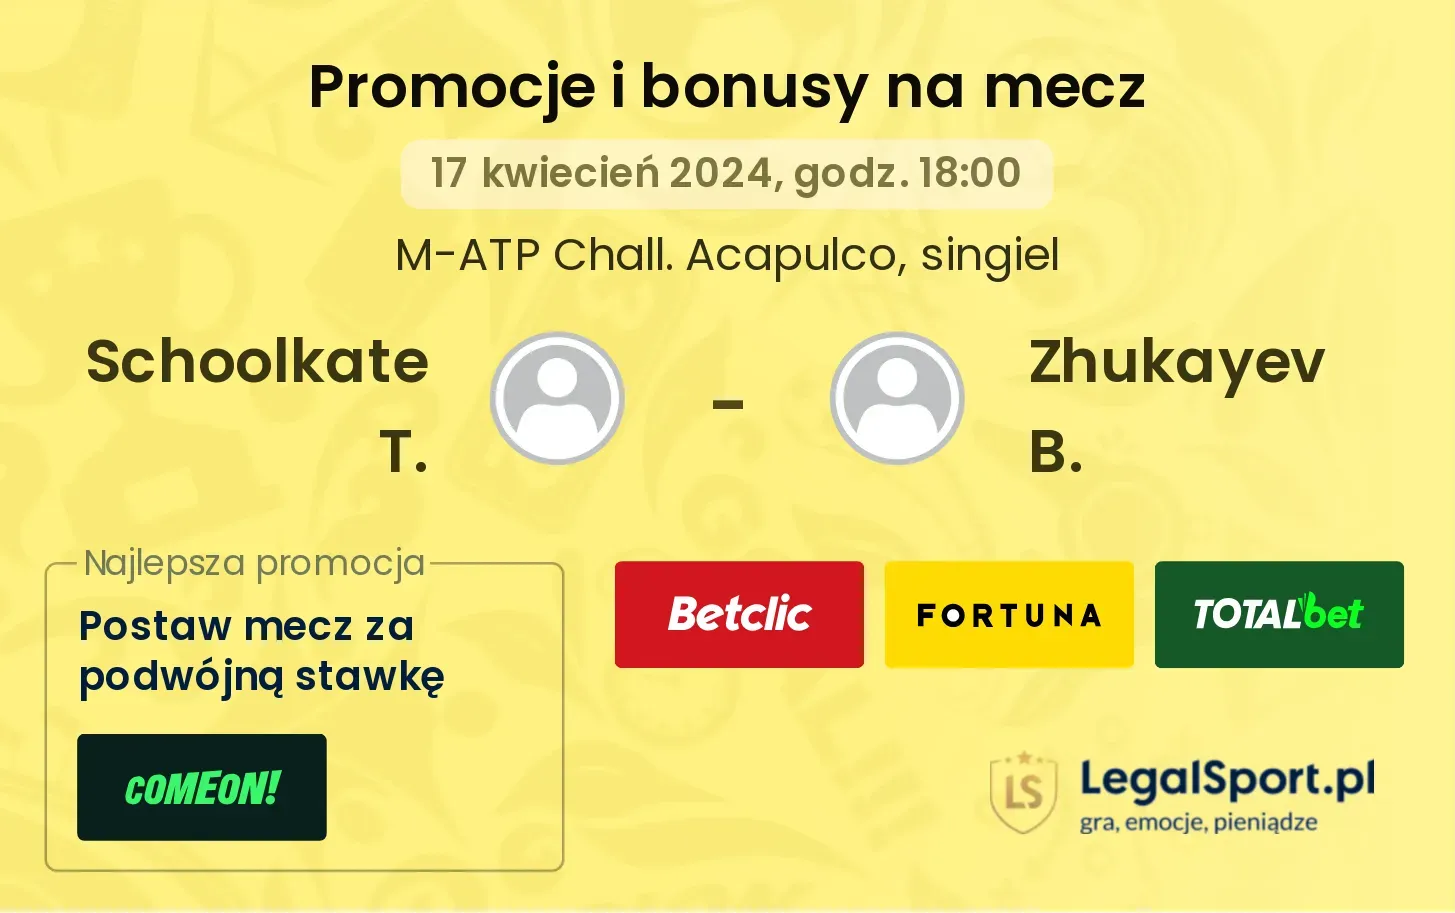 Schoolkate T. - Zhukayev B. promocje bonusy na mecz